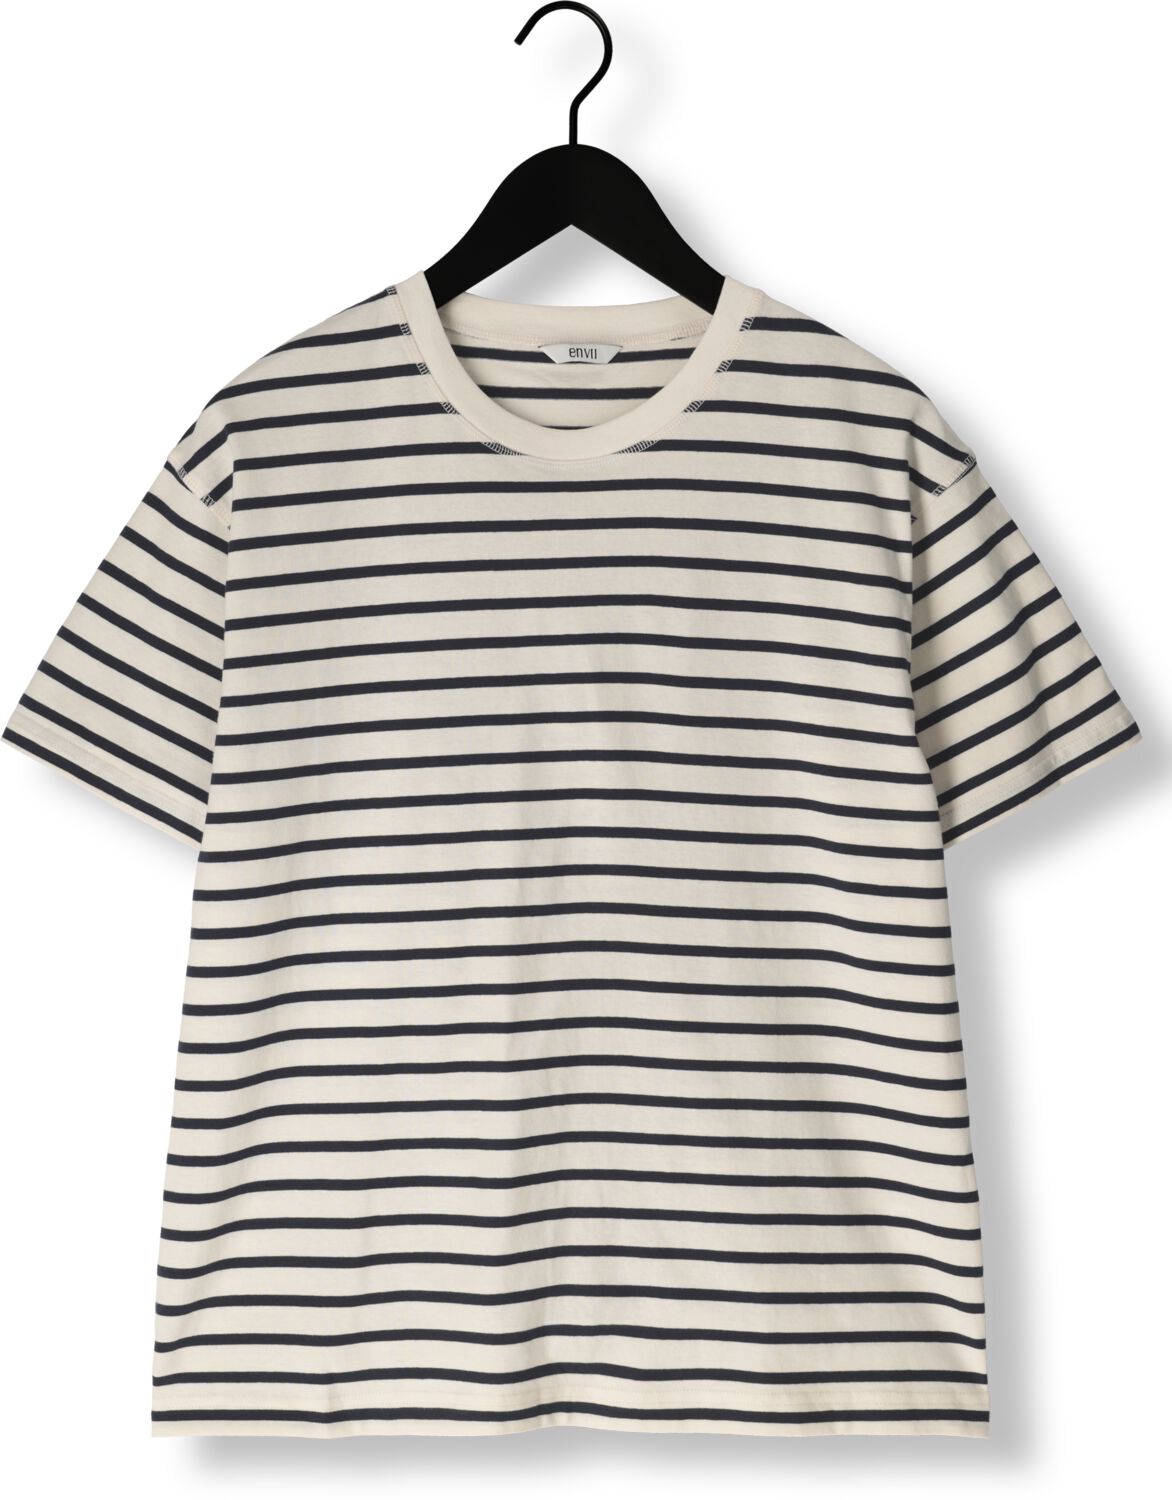 ENVII Dames Tops & T-shirts Enkulla Ss Stripe 5310 Blauw wit Gestreept